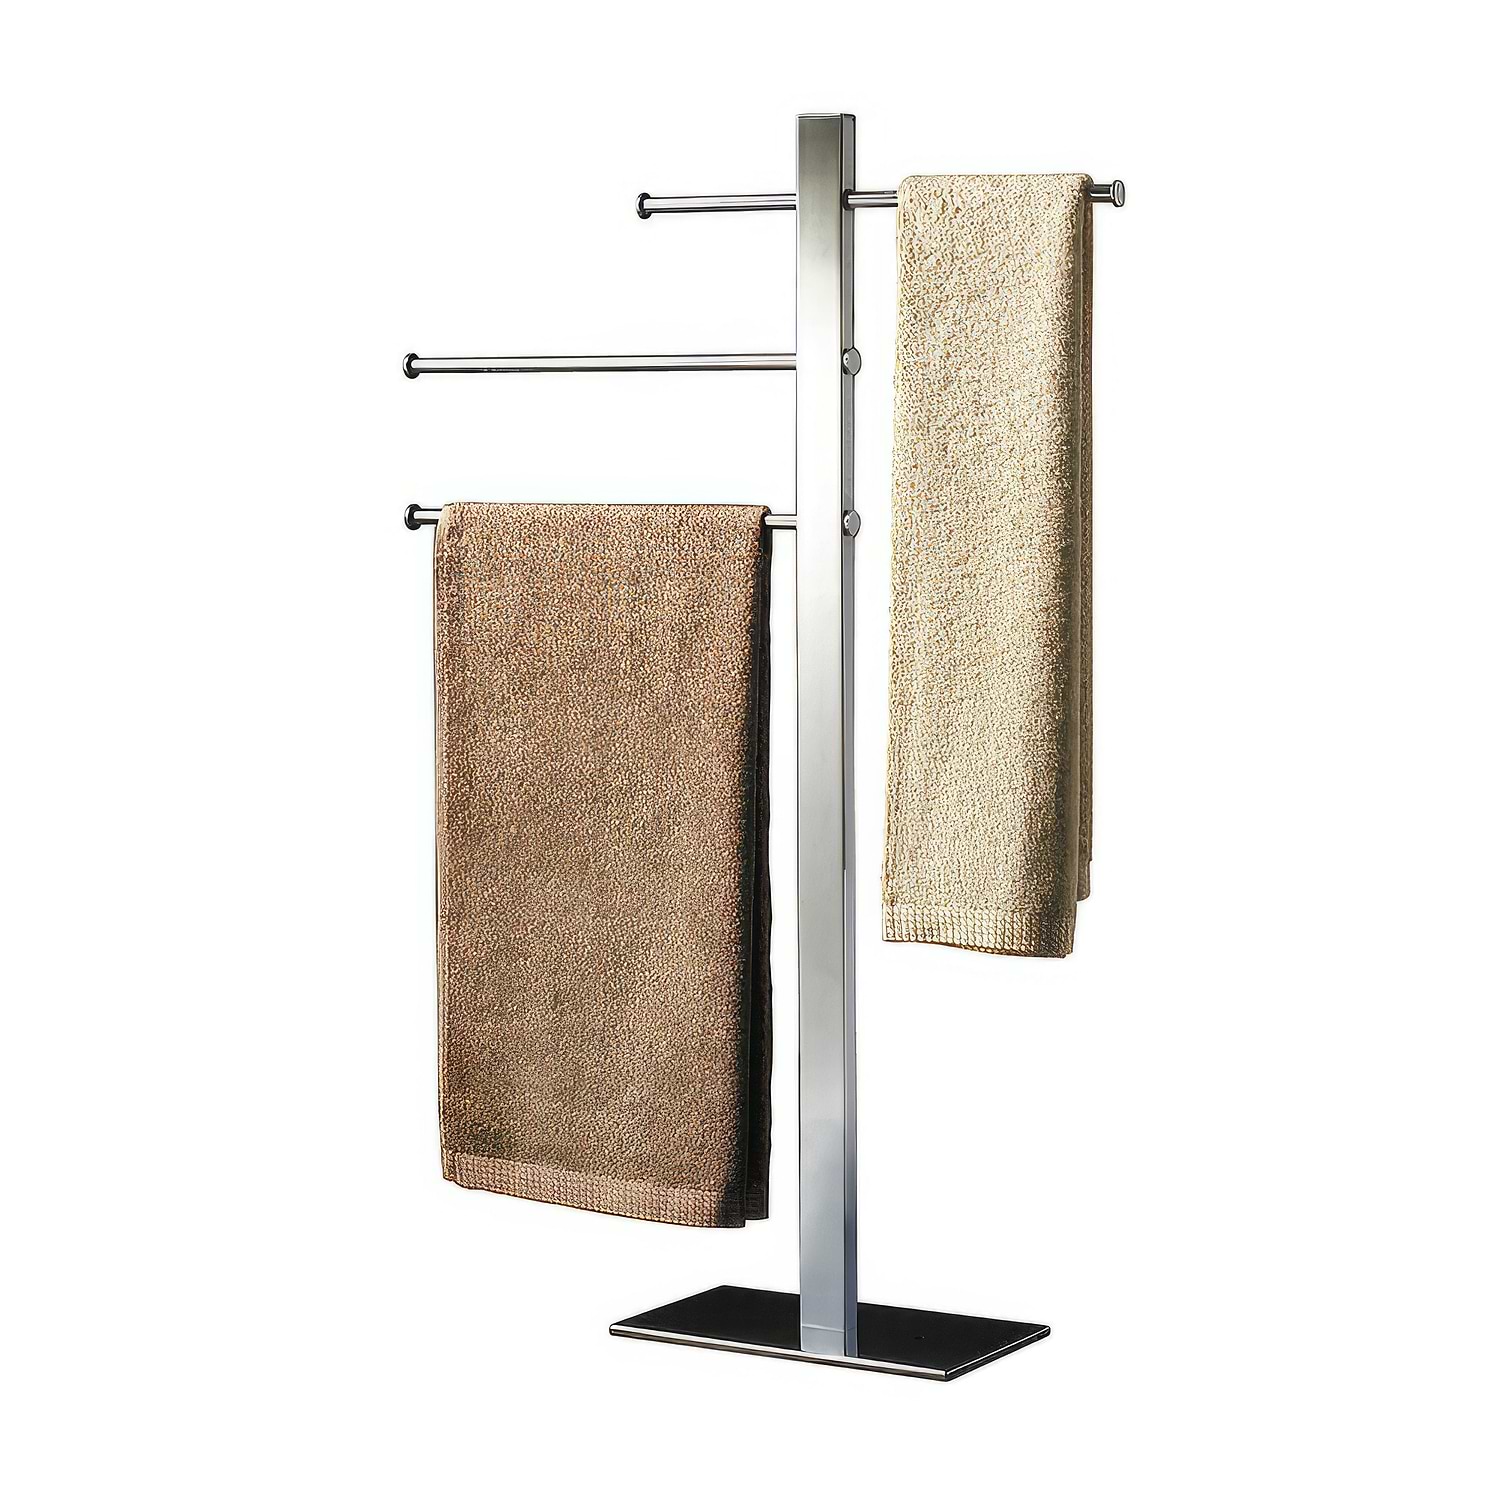 bRIDGE - Towel Stand - Hyperion Tiles